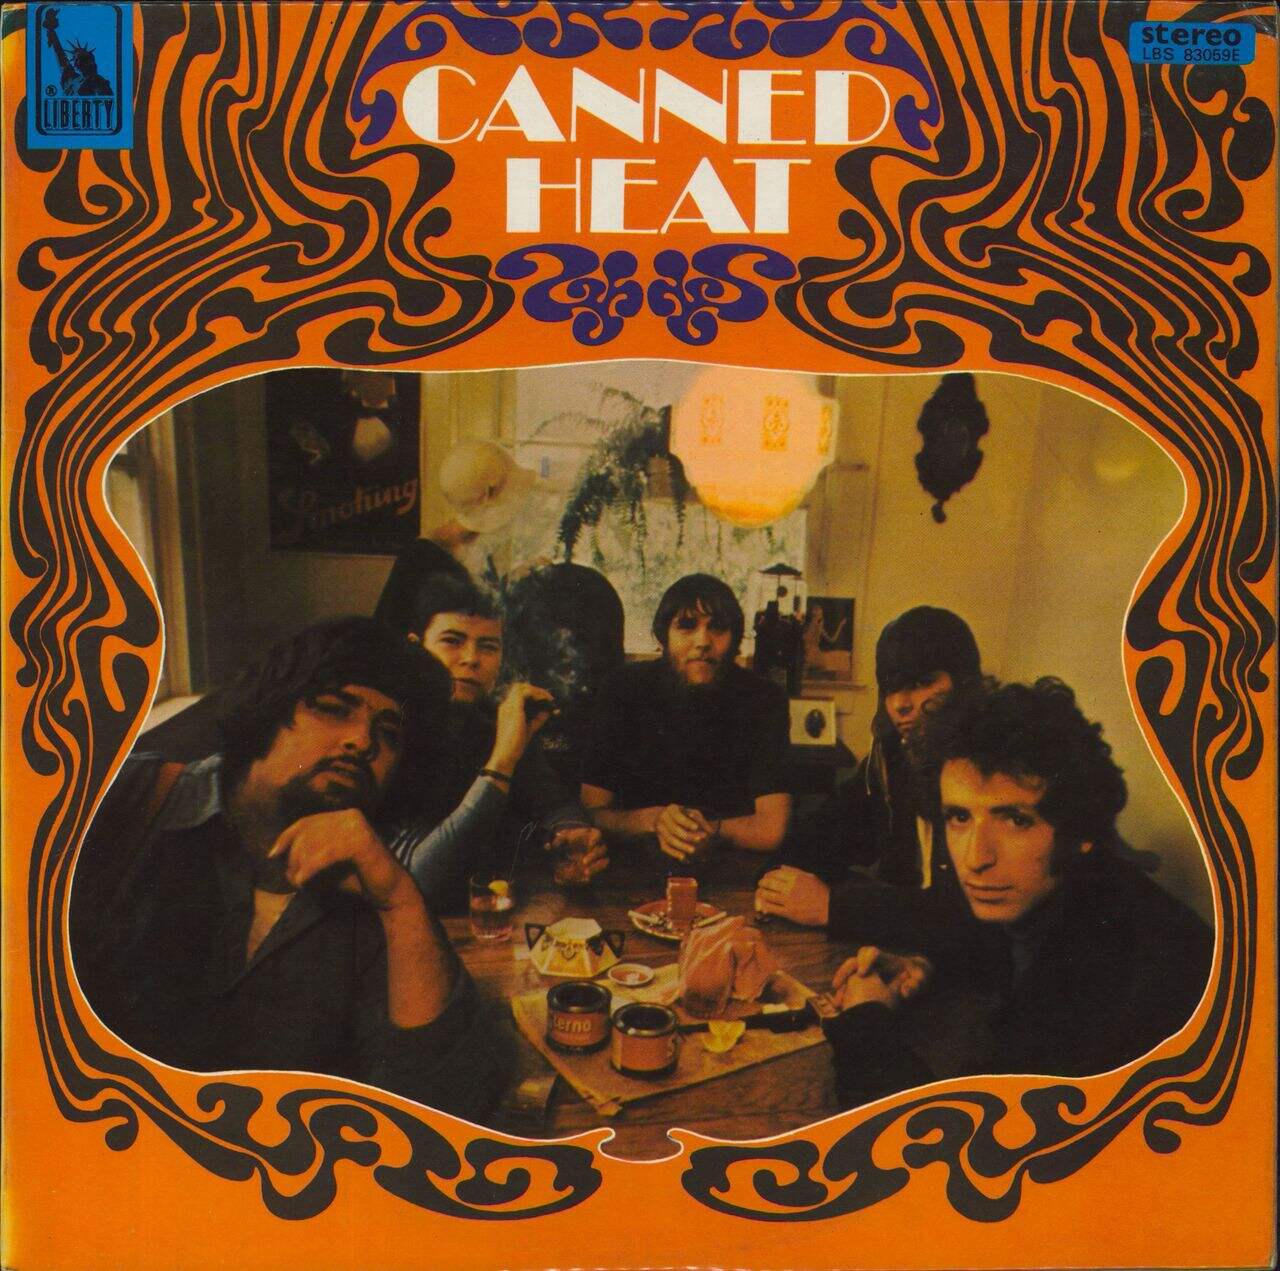 Canned Heat Canned Heat - 1st - Stereo Warning Sticker - EX UK Vinyl LP